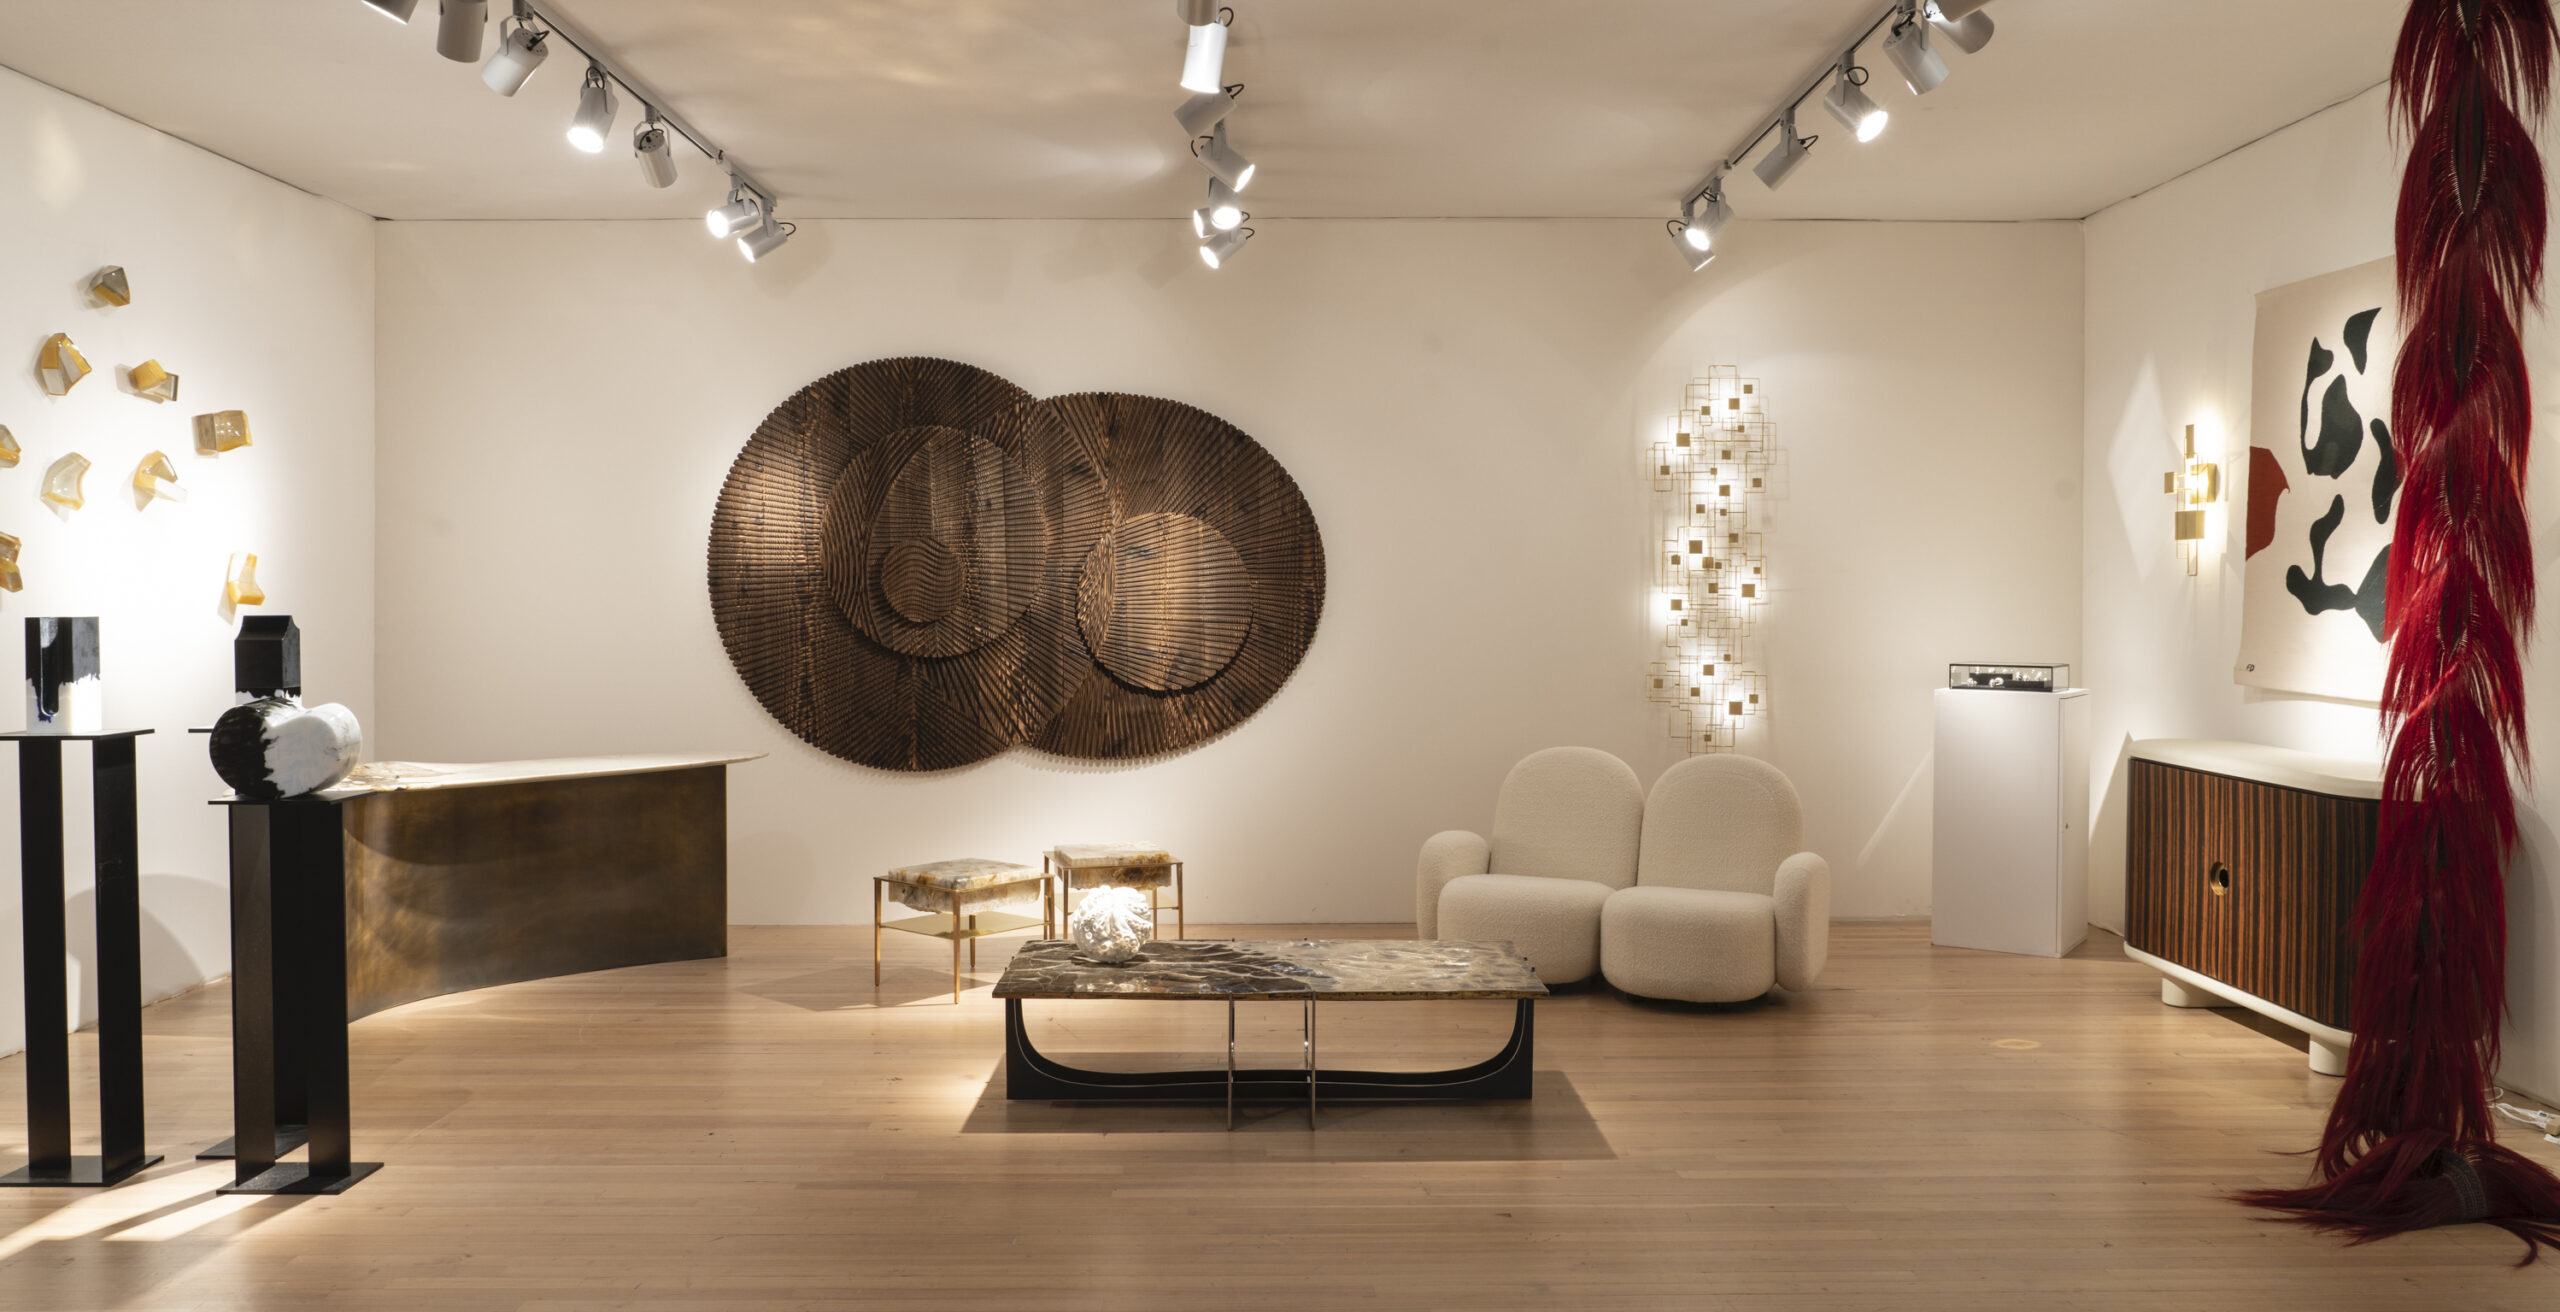 Galerie Negropontes at Salon Art + Design 2022 in New York, featured in Effect Magazine